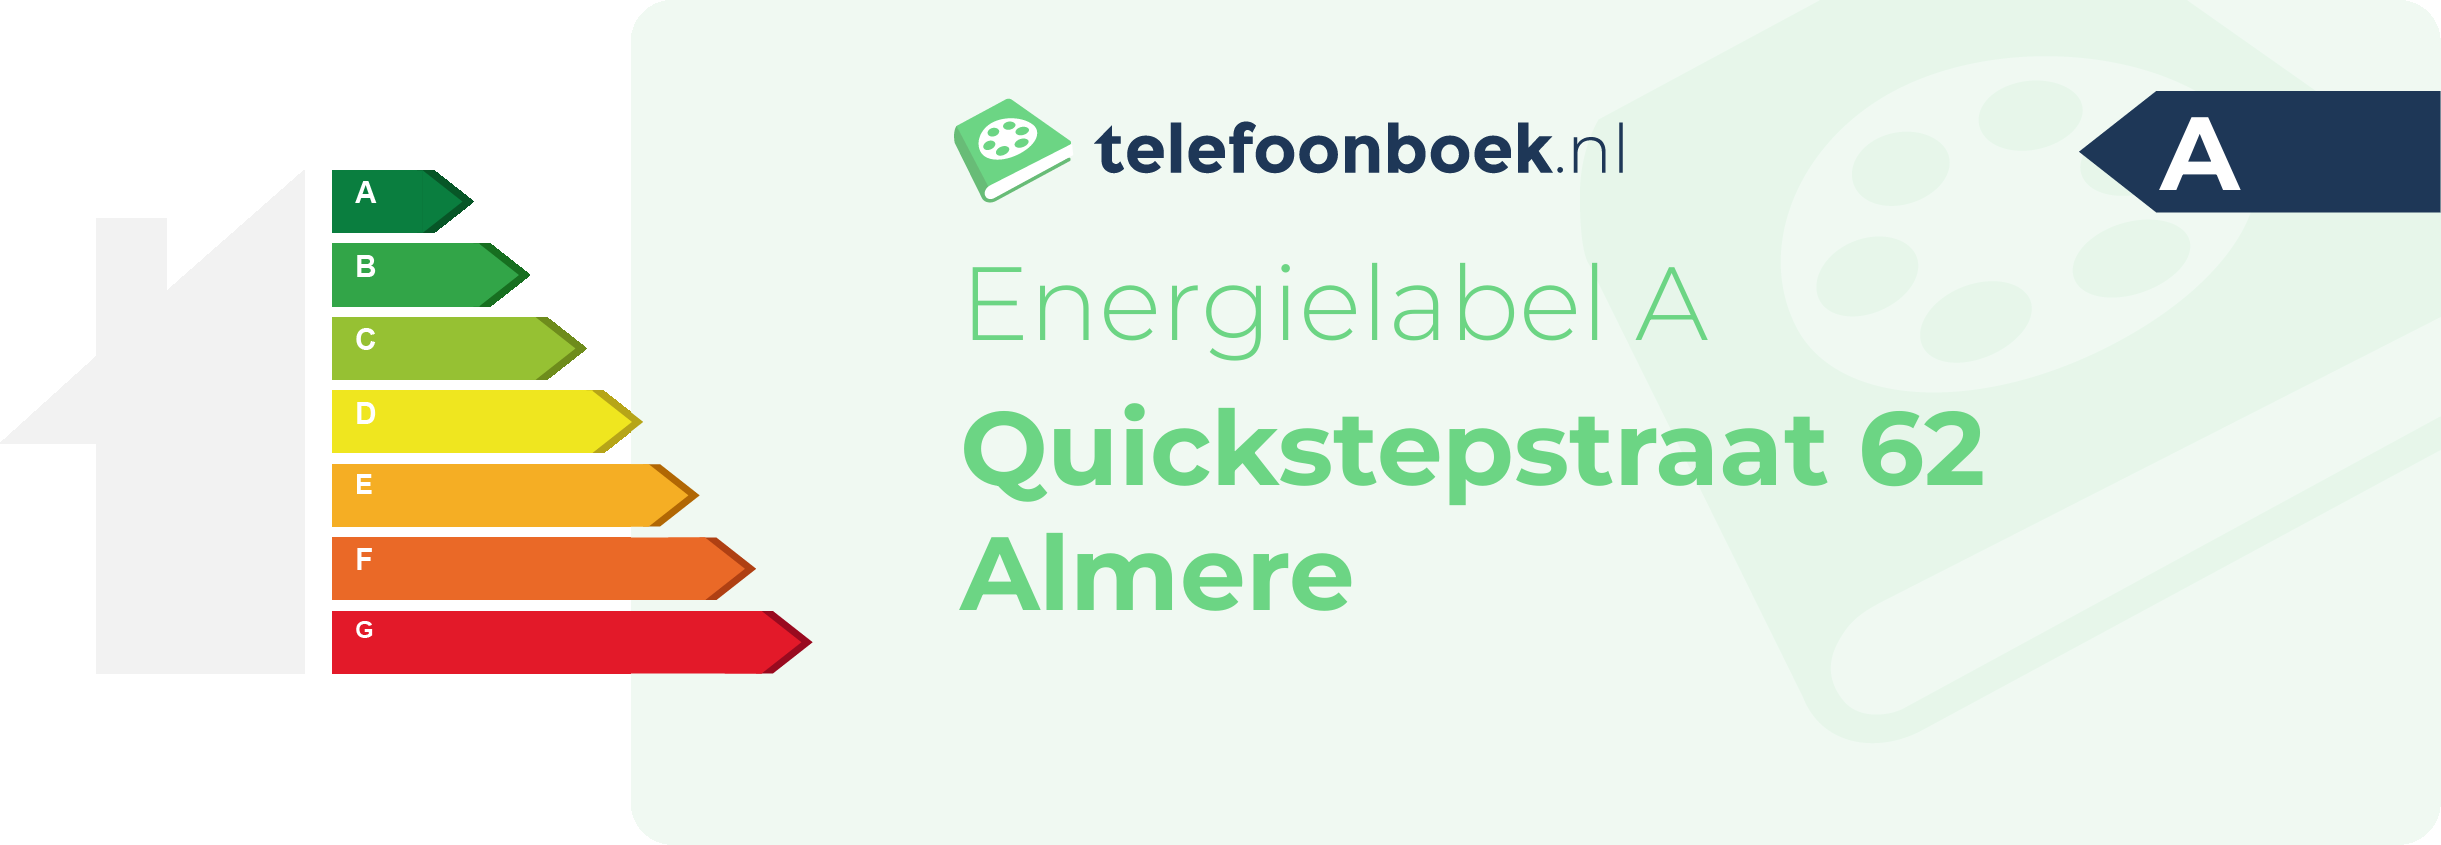 Energielabel Quickstepstraat 62 Almere